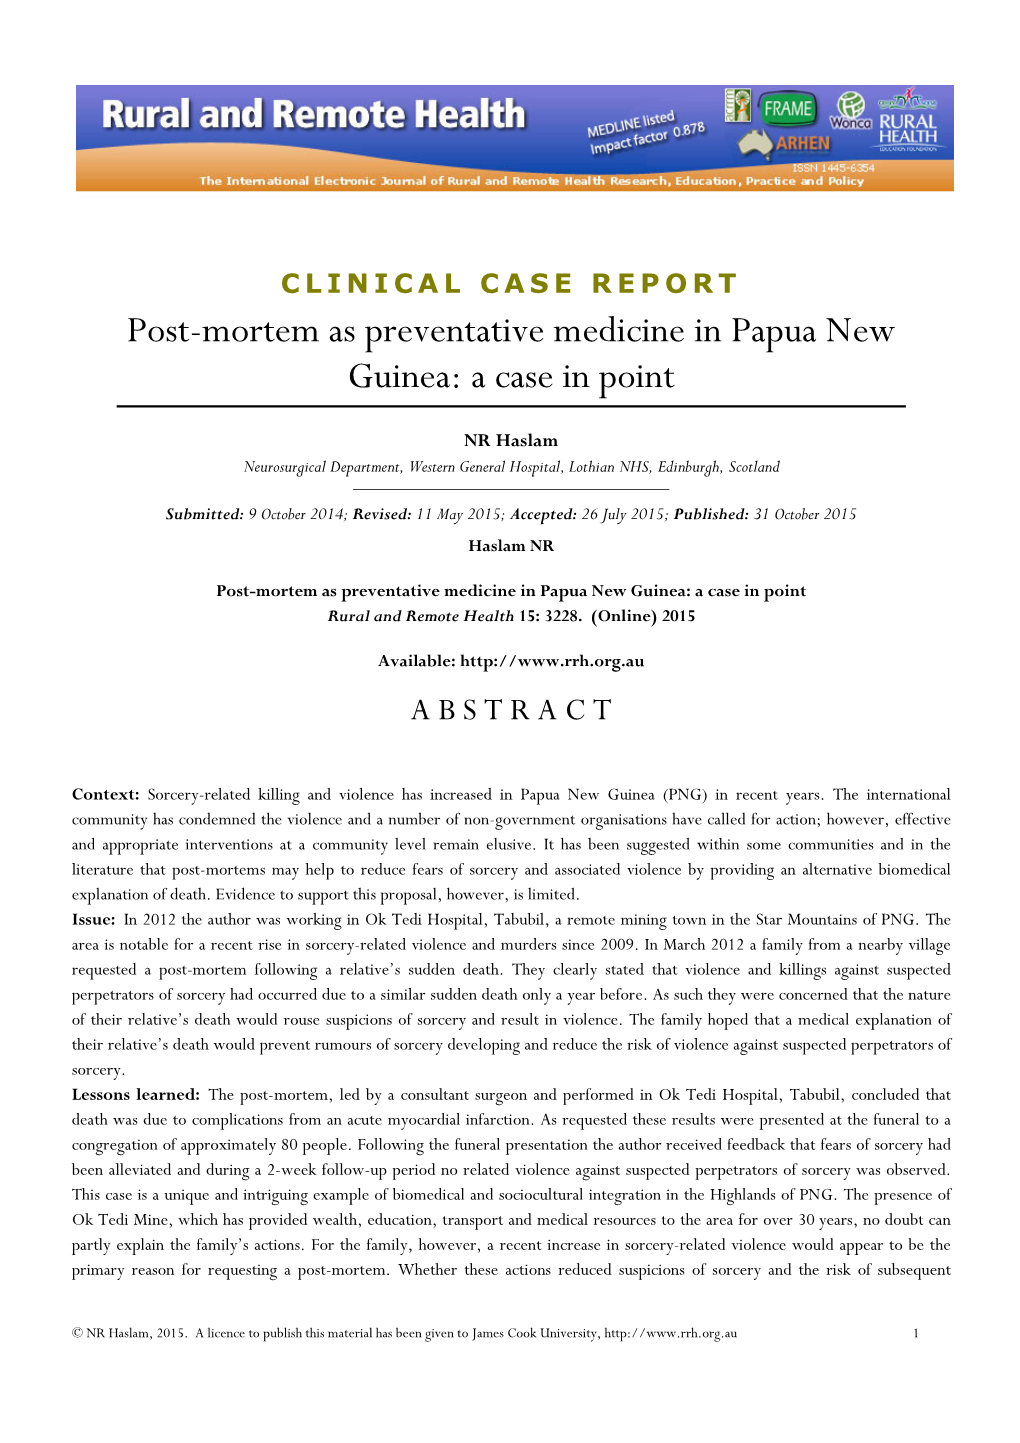 Post-Mortem As Preventative Medicine in Papua New Guinea: a Case in Point